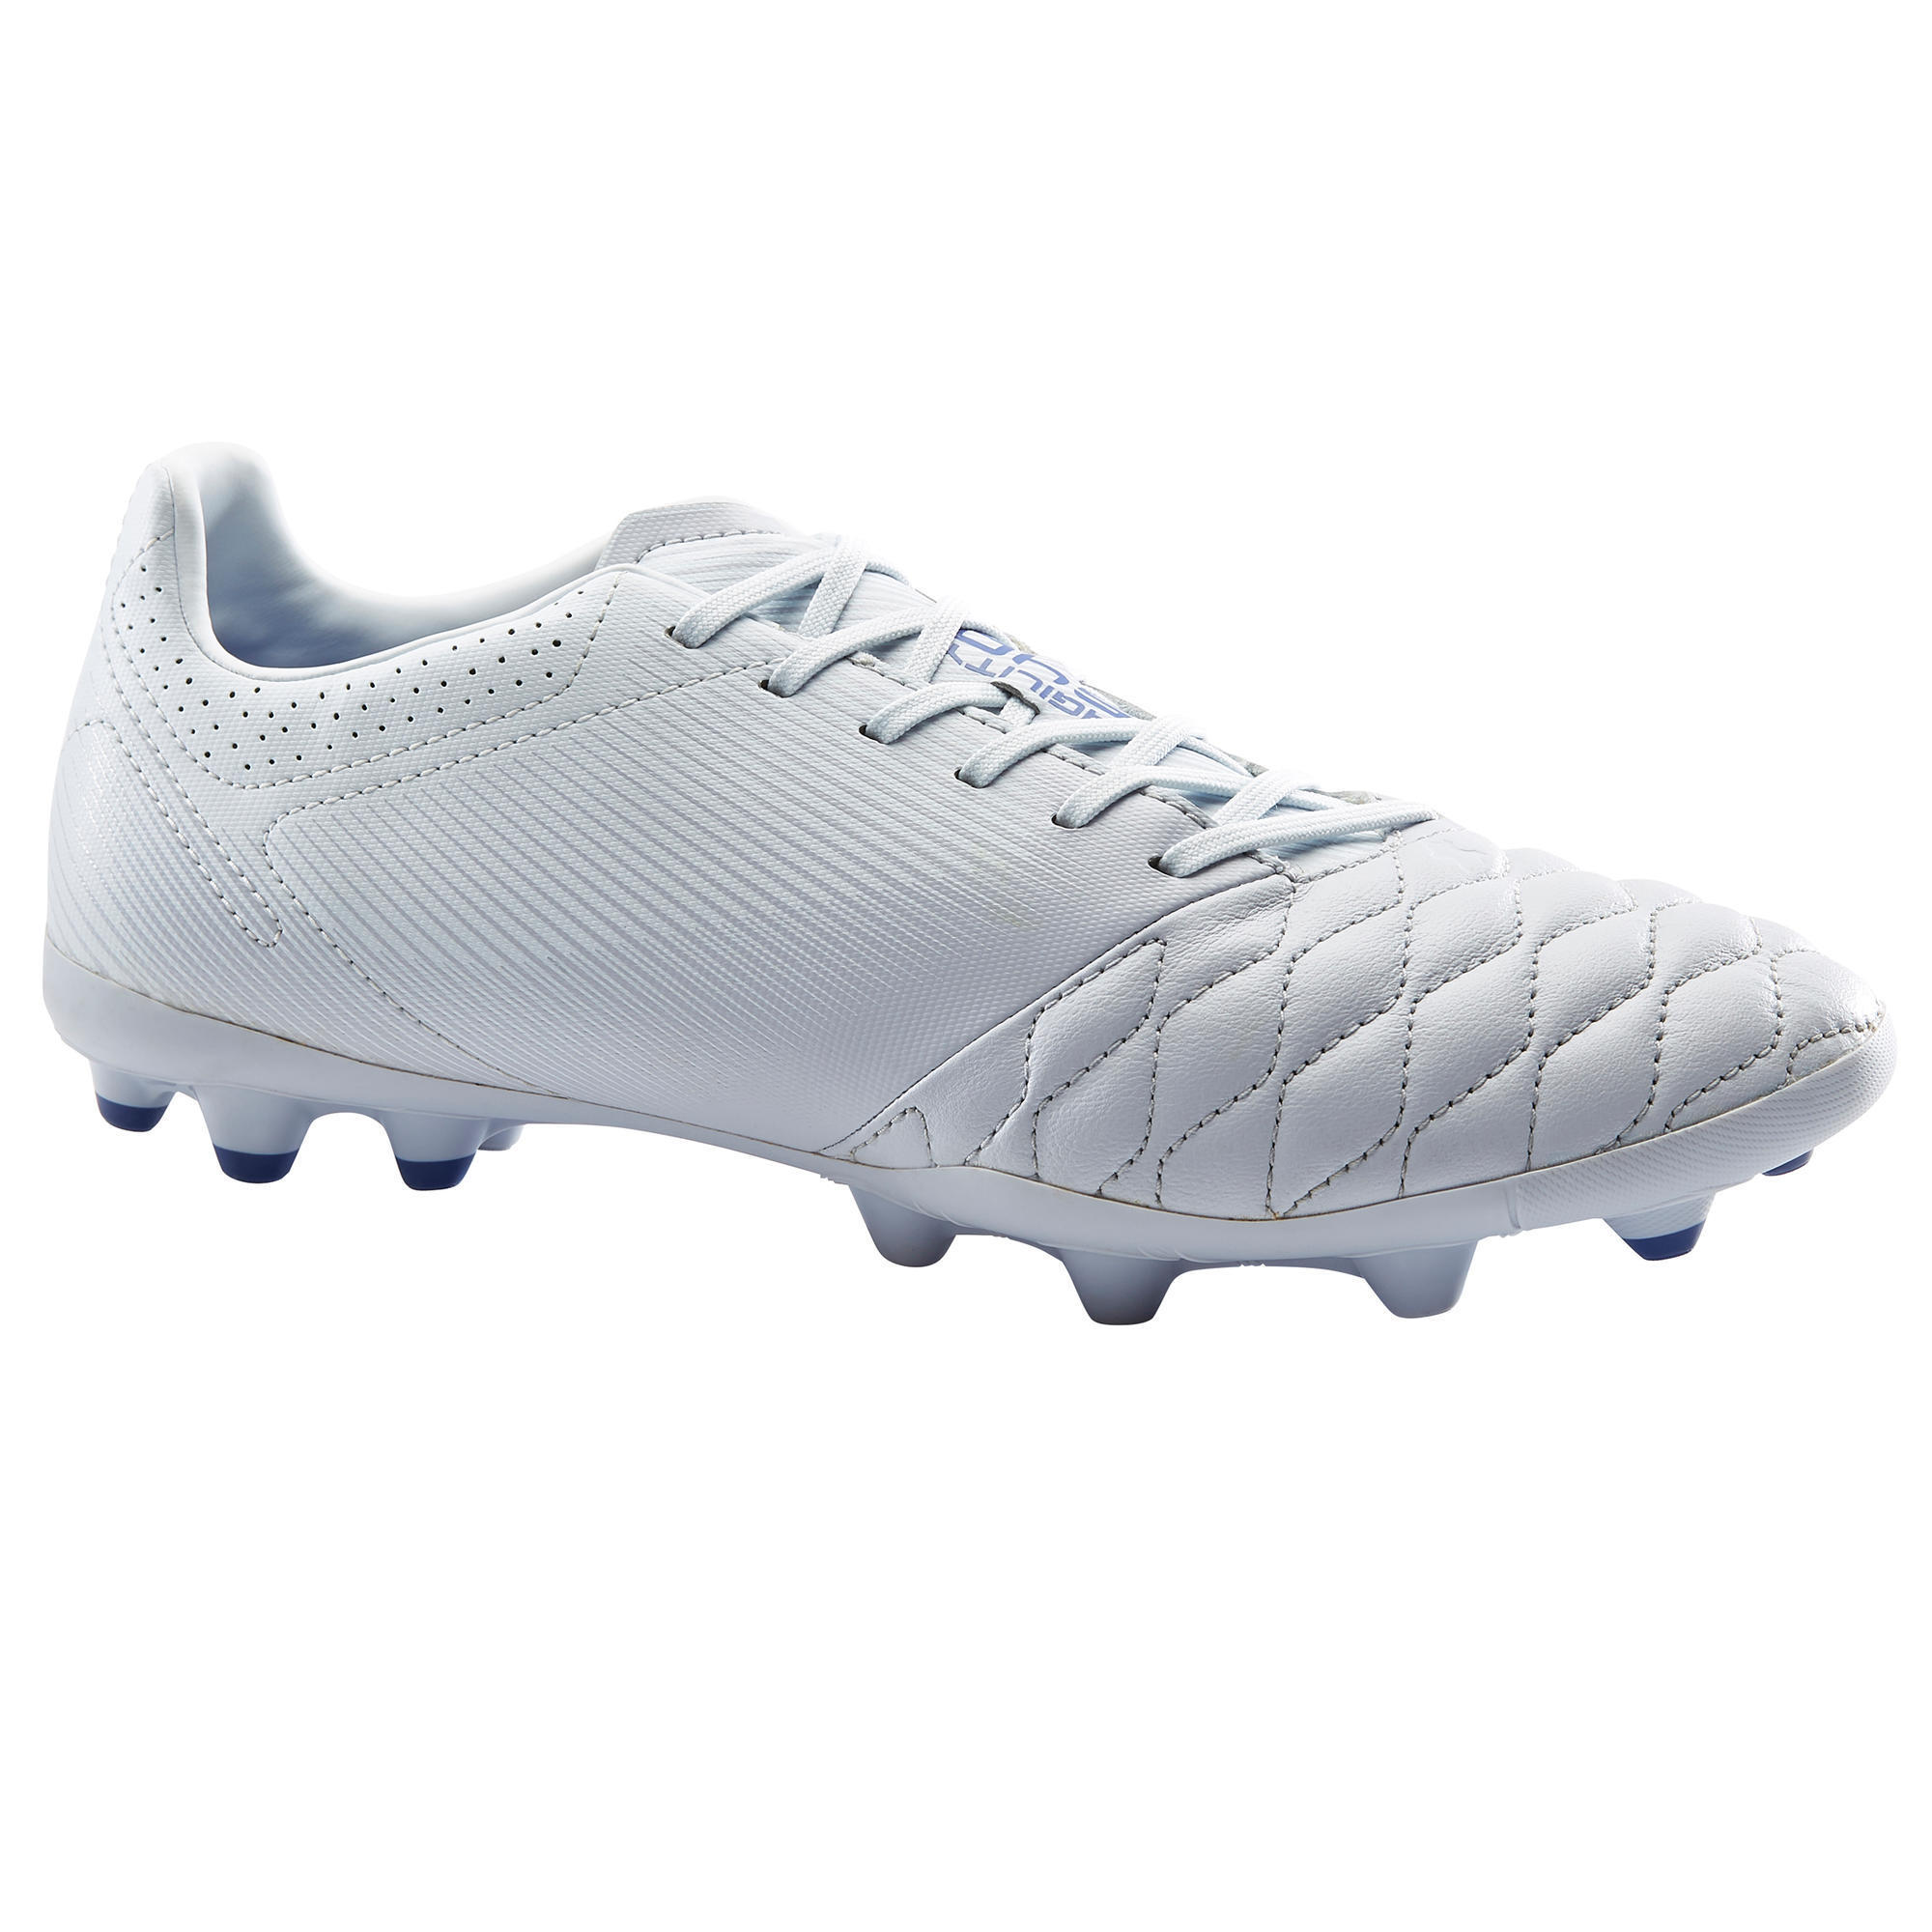 Football Shoes Hong Kong | Soccer Boots 